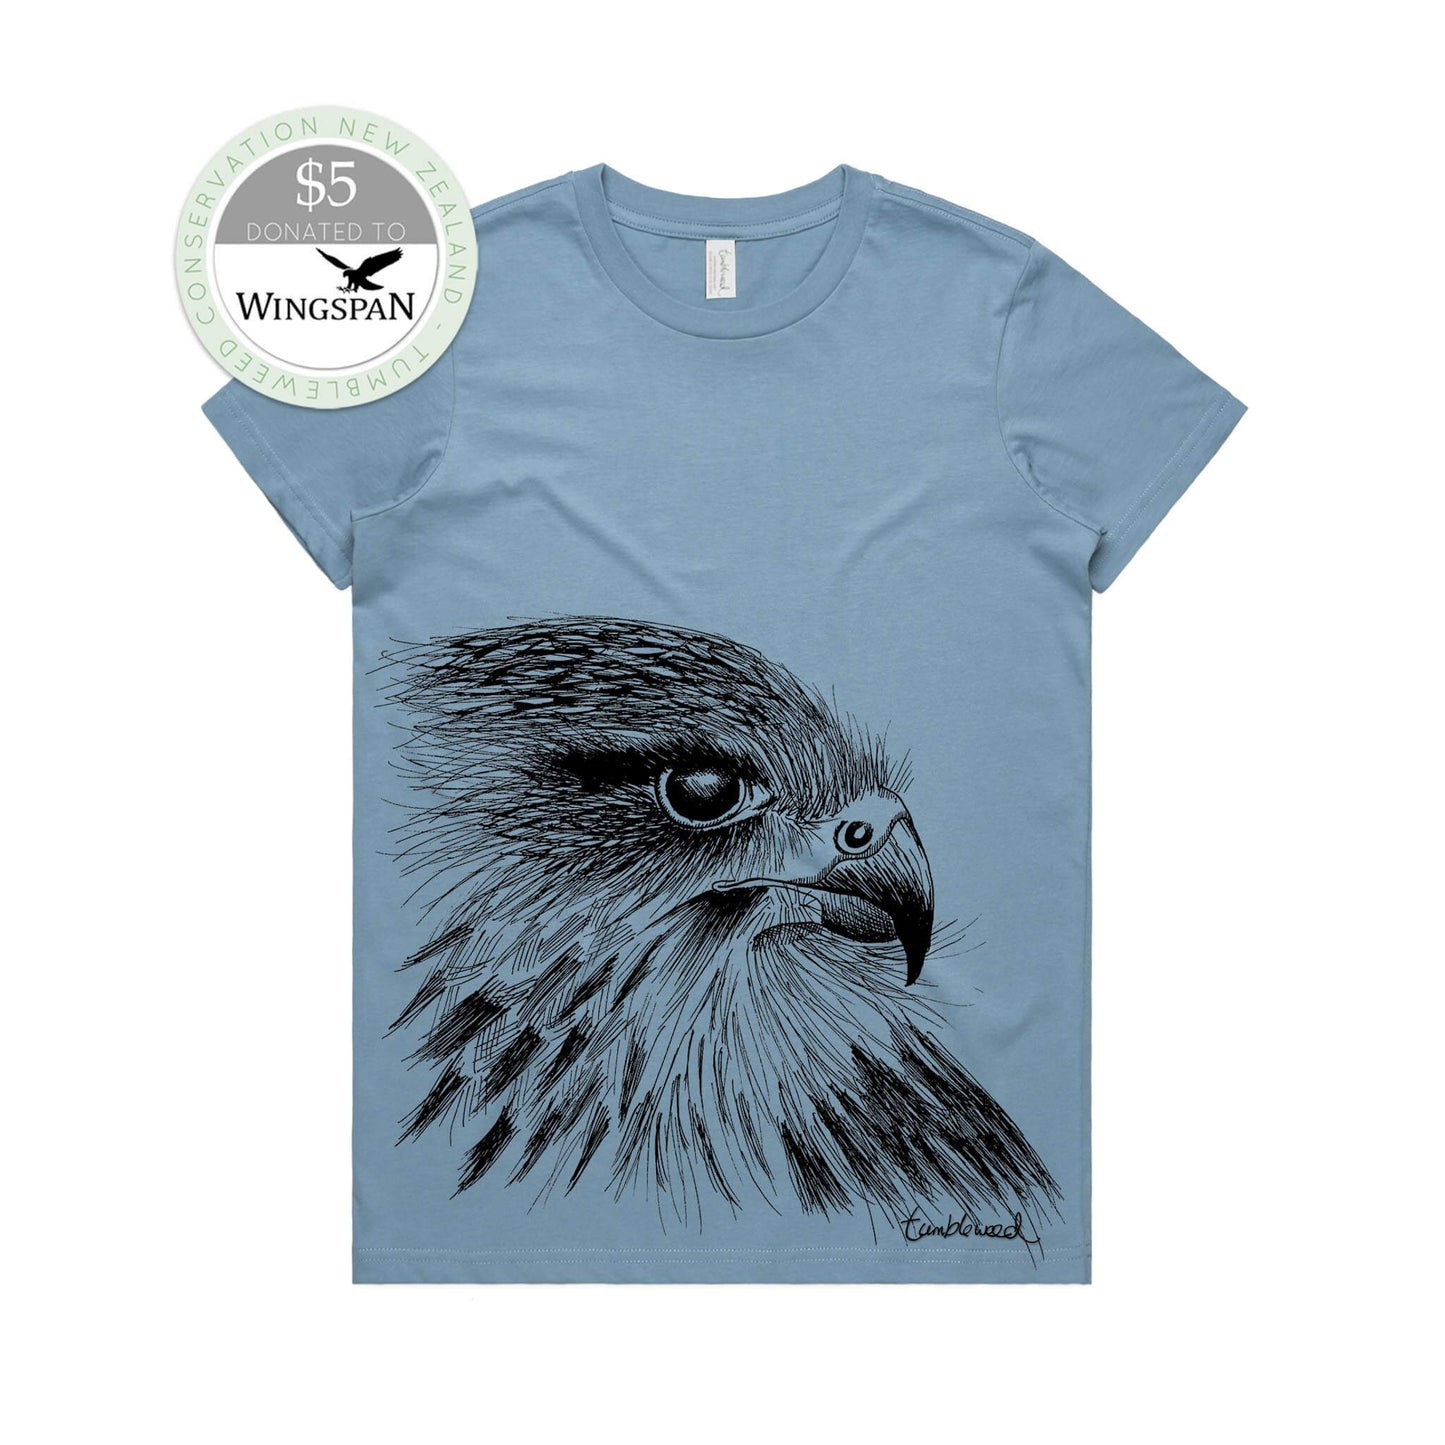 Kārearea/NZ Falcon T-shirt